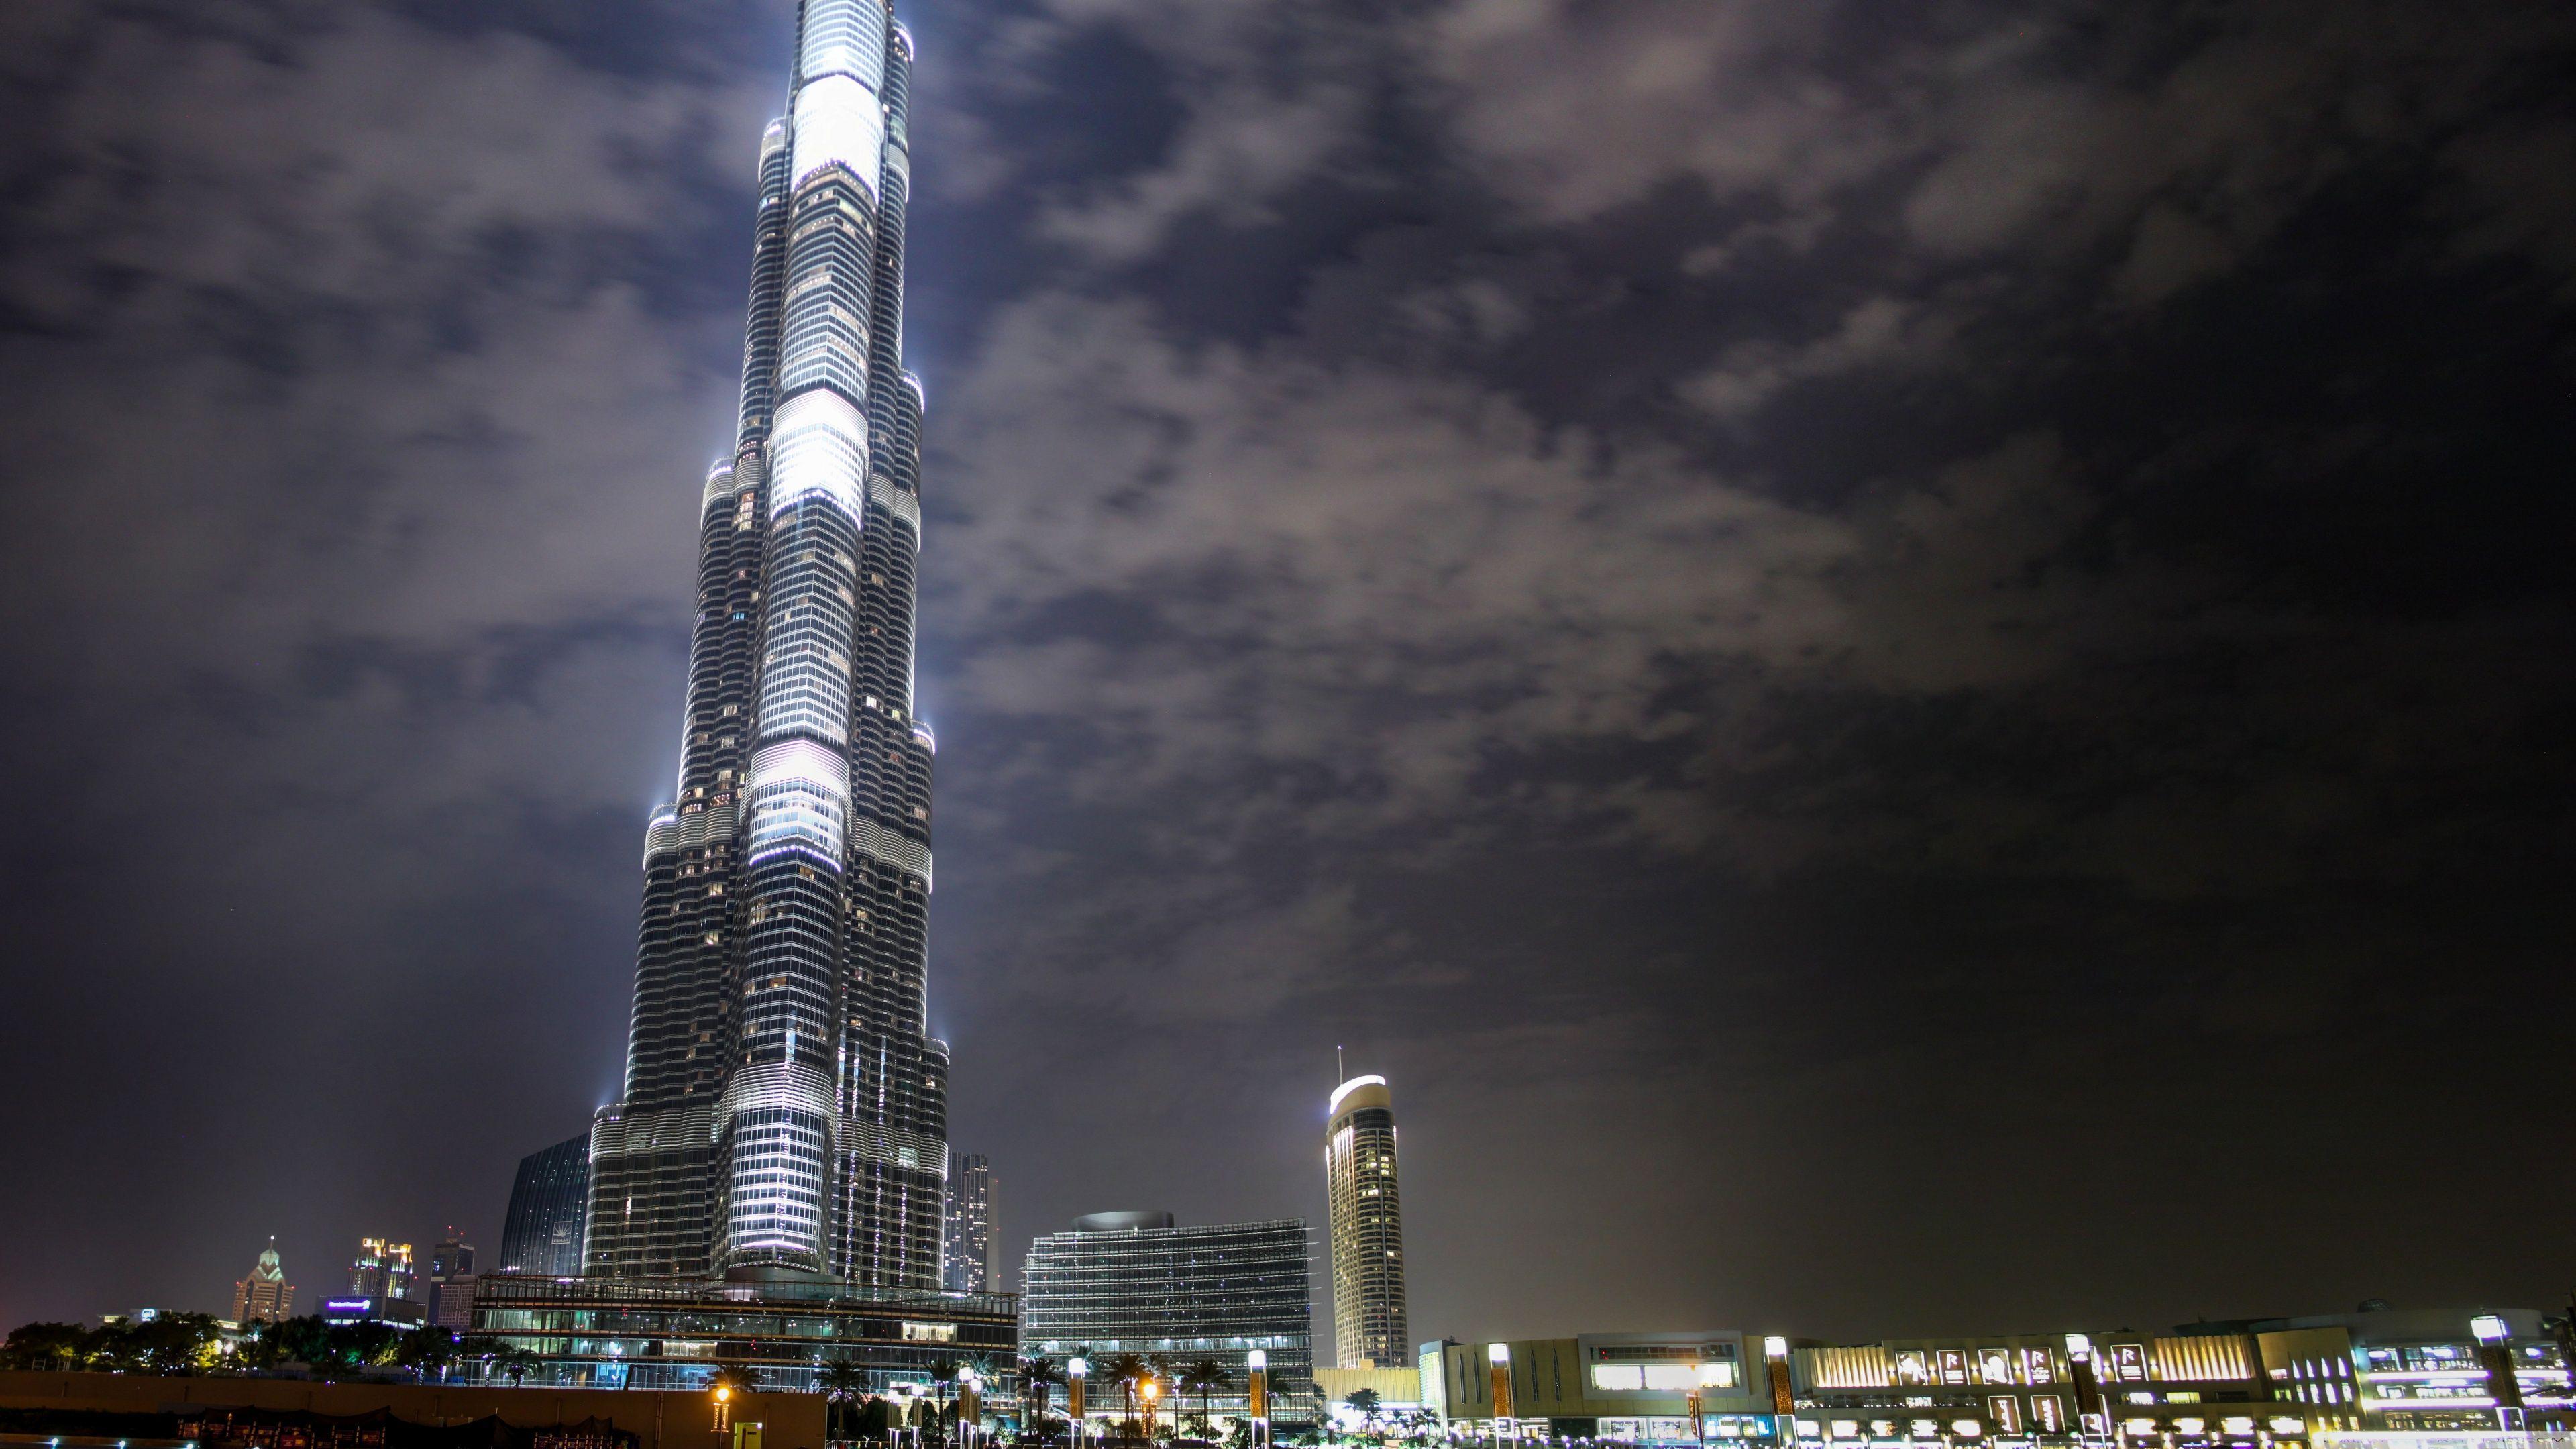 Burj Khalifa At Night HD desktop wallpaper, Widescreen, High